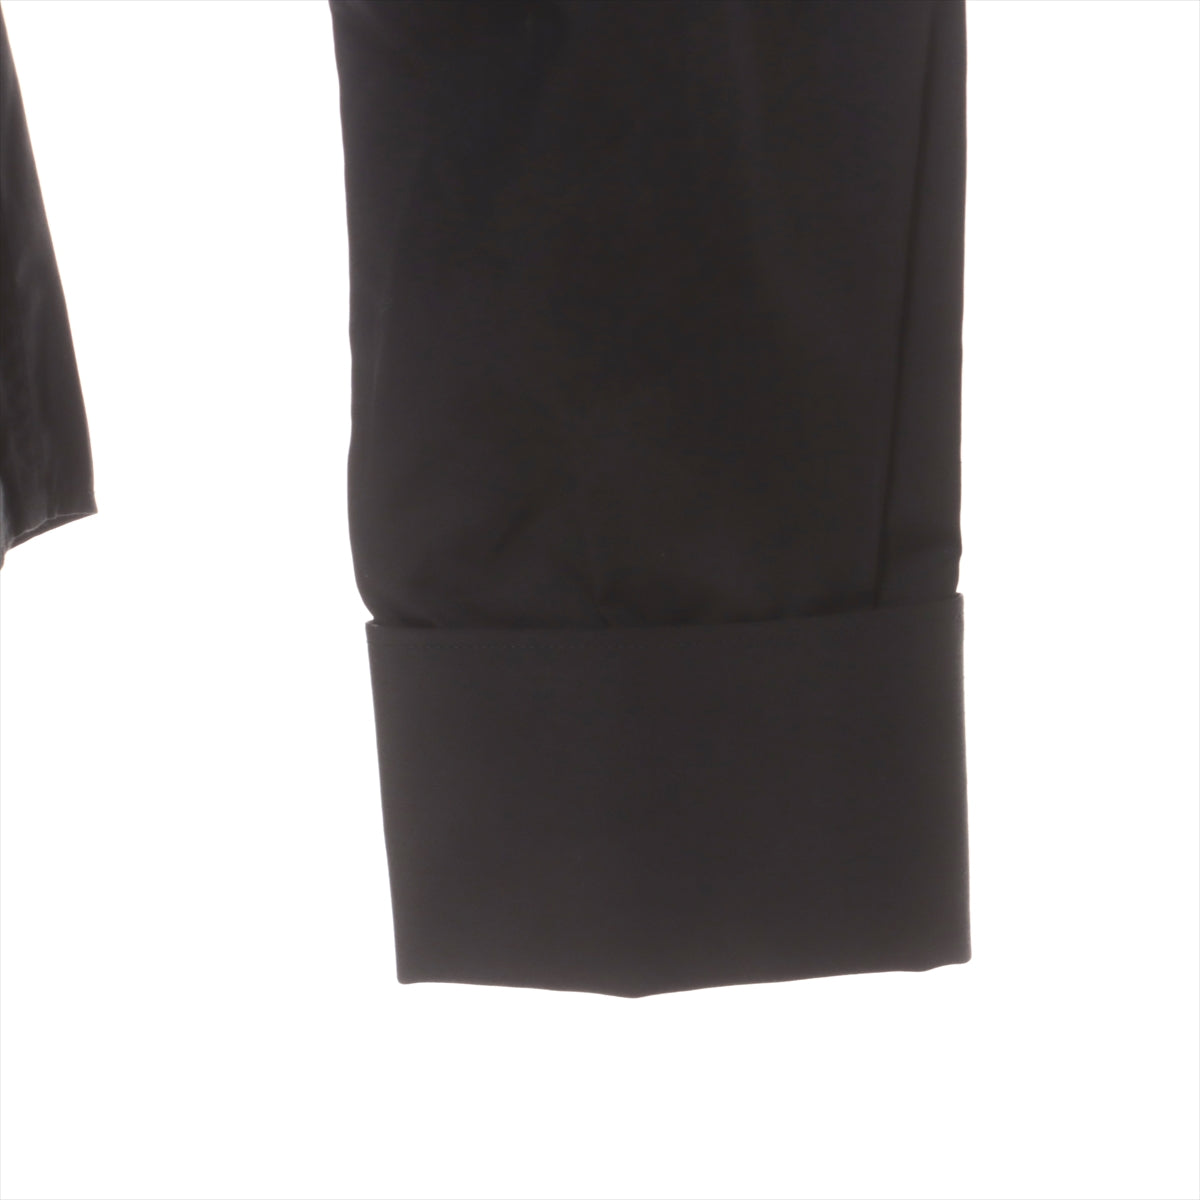 Givenchy Cotton Shirt 39 Men's Black  16S6021306